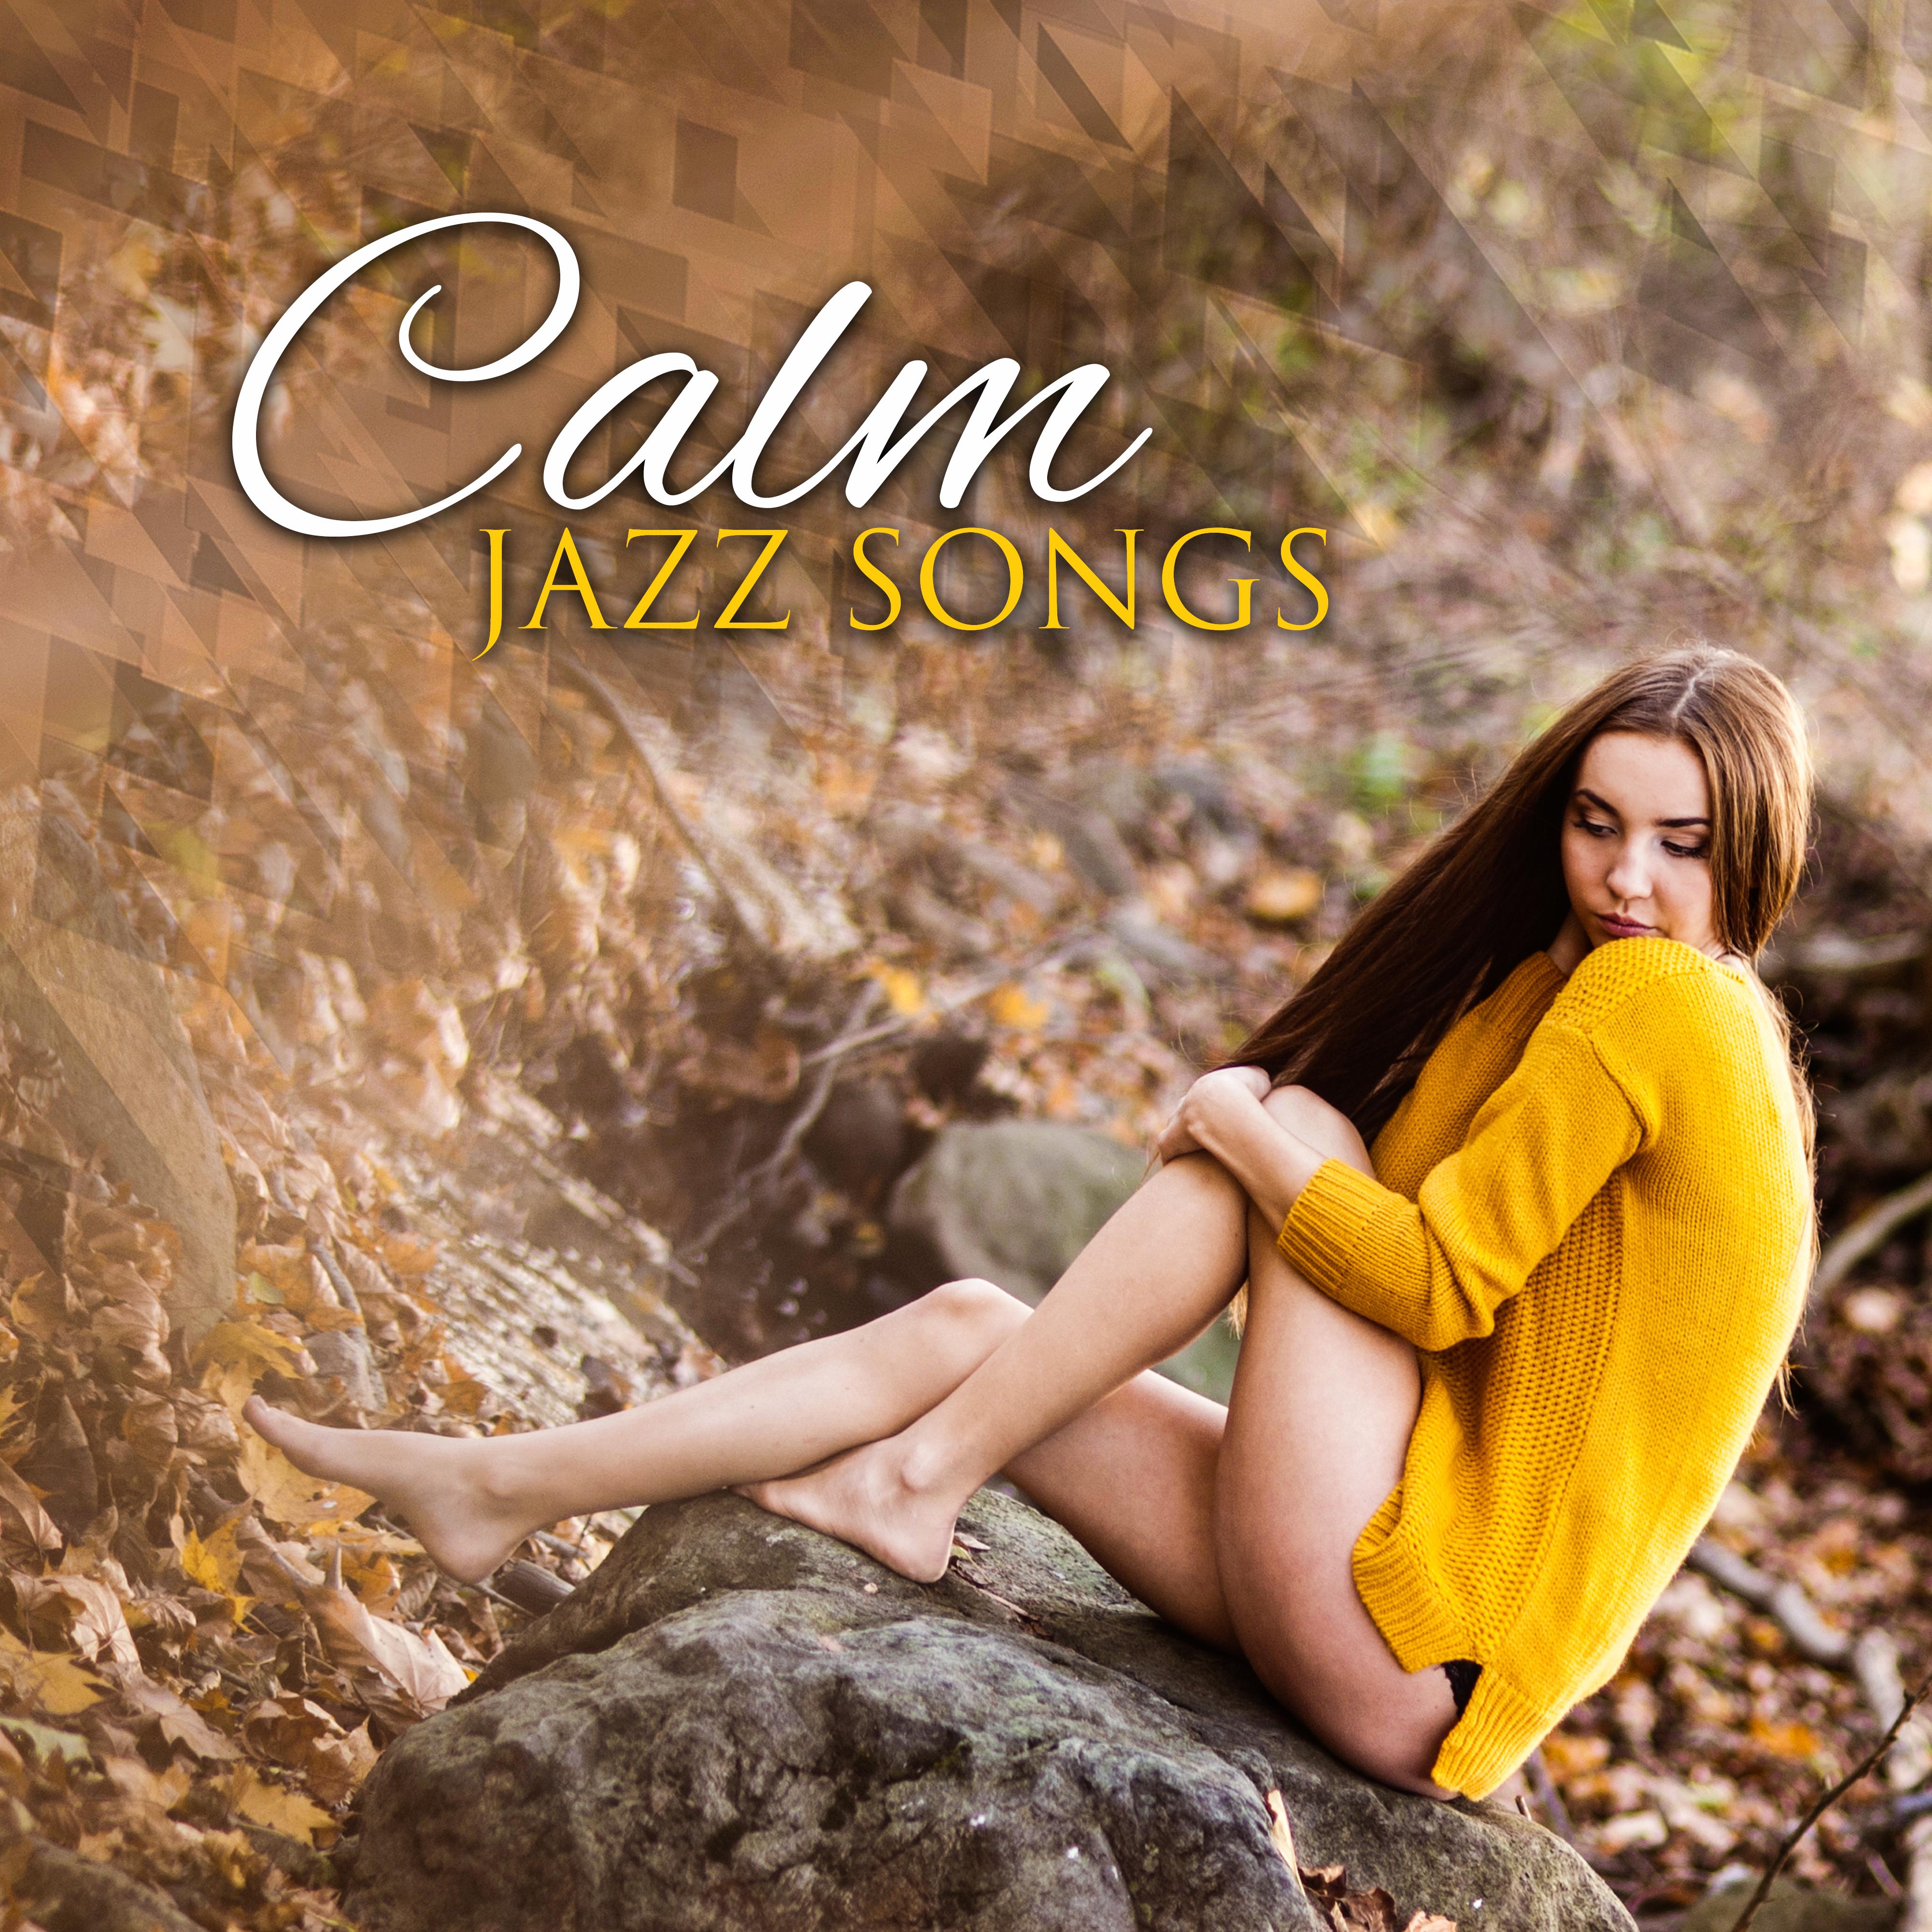 Calm Jazz Songs  Relaxing Jazz, Music for Sleep, Rest, Instrumental Album